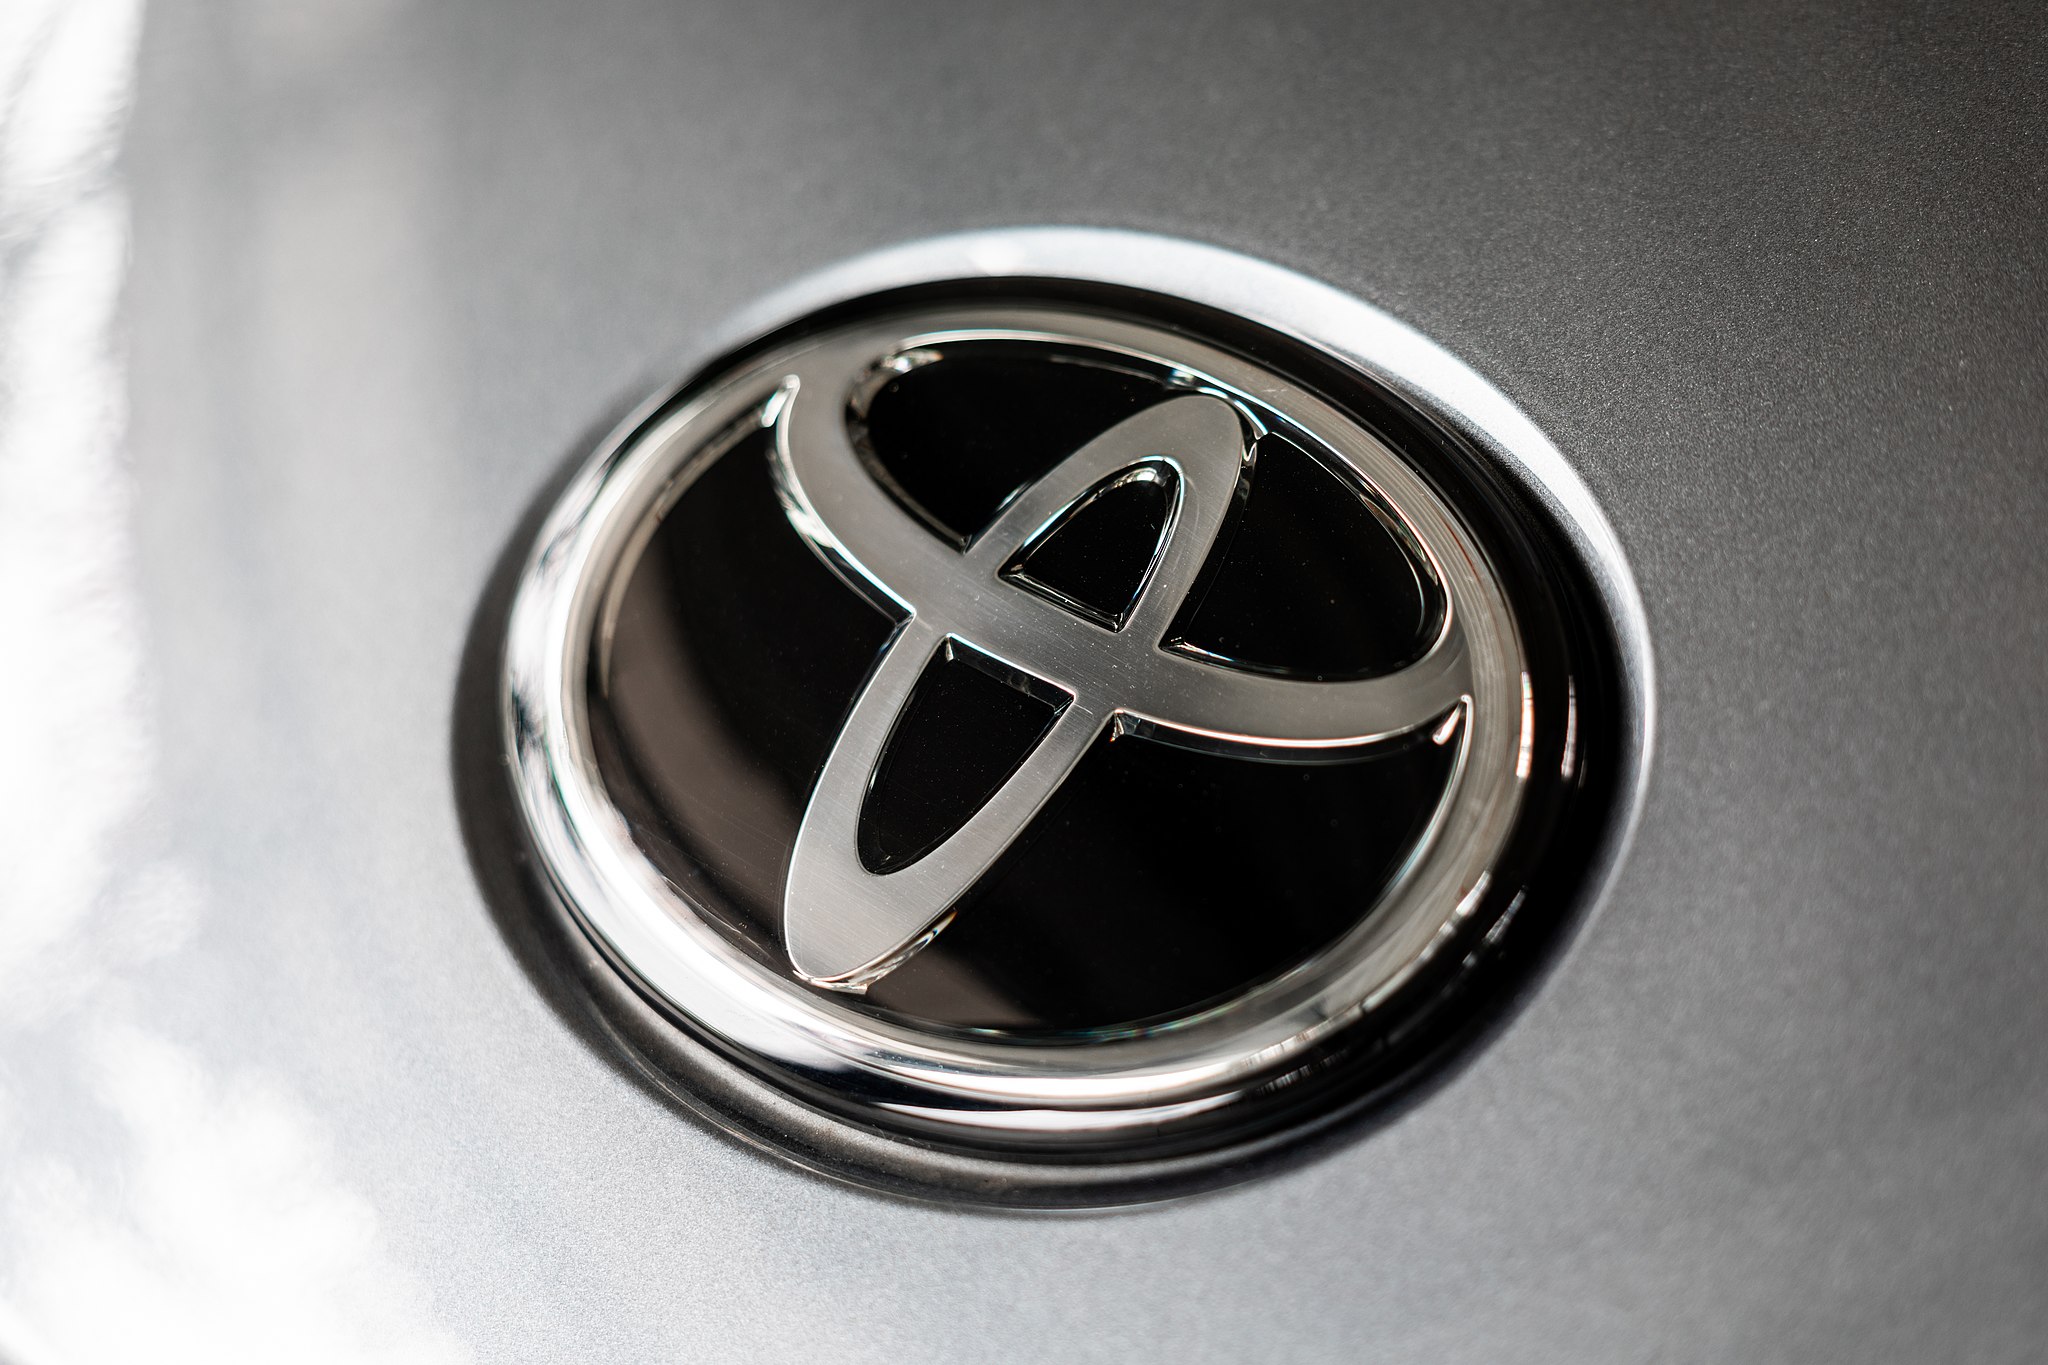 New Toyota CEO considers hydrogen a priority despite EV focus